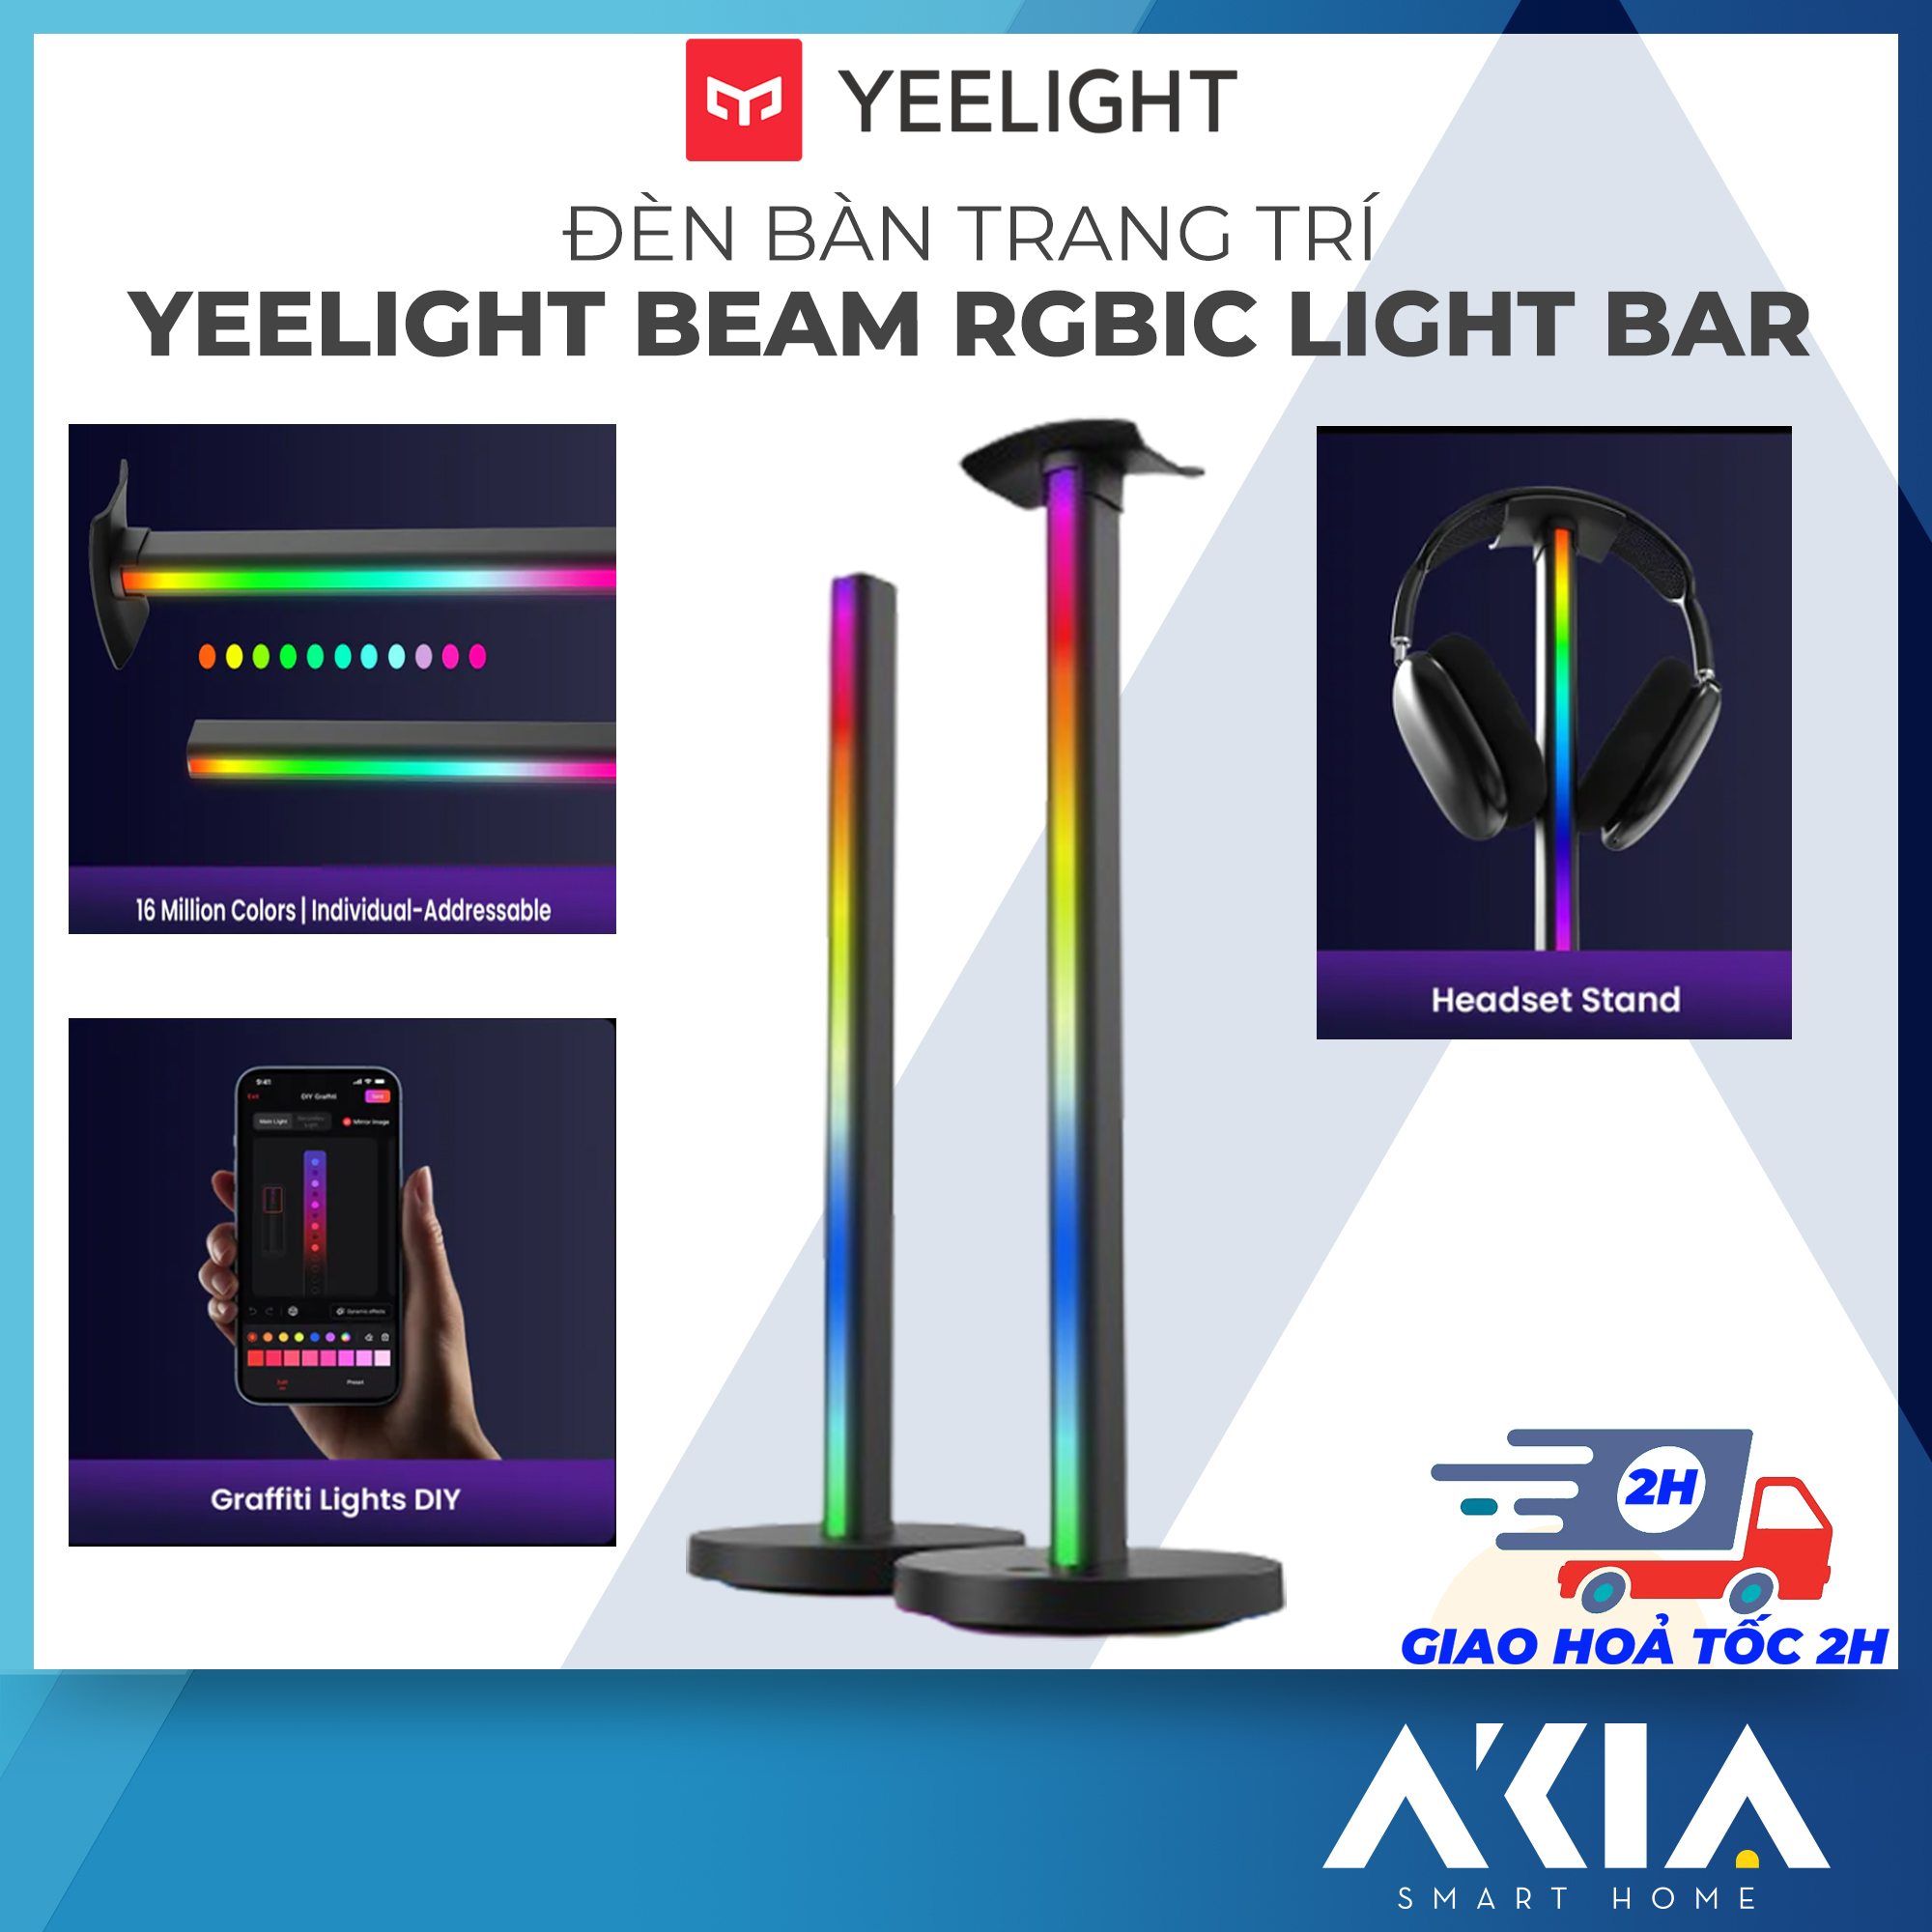 Yeelight Beam RGBIC Light Bar- 16 million colors, music sync